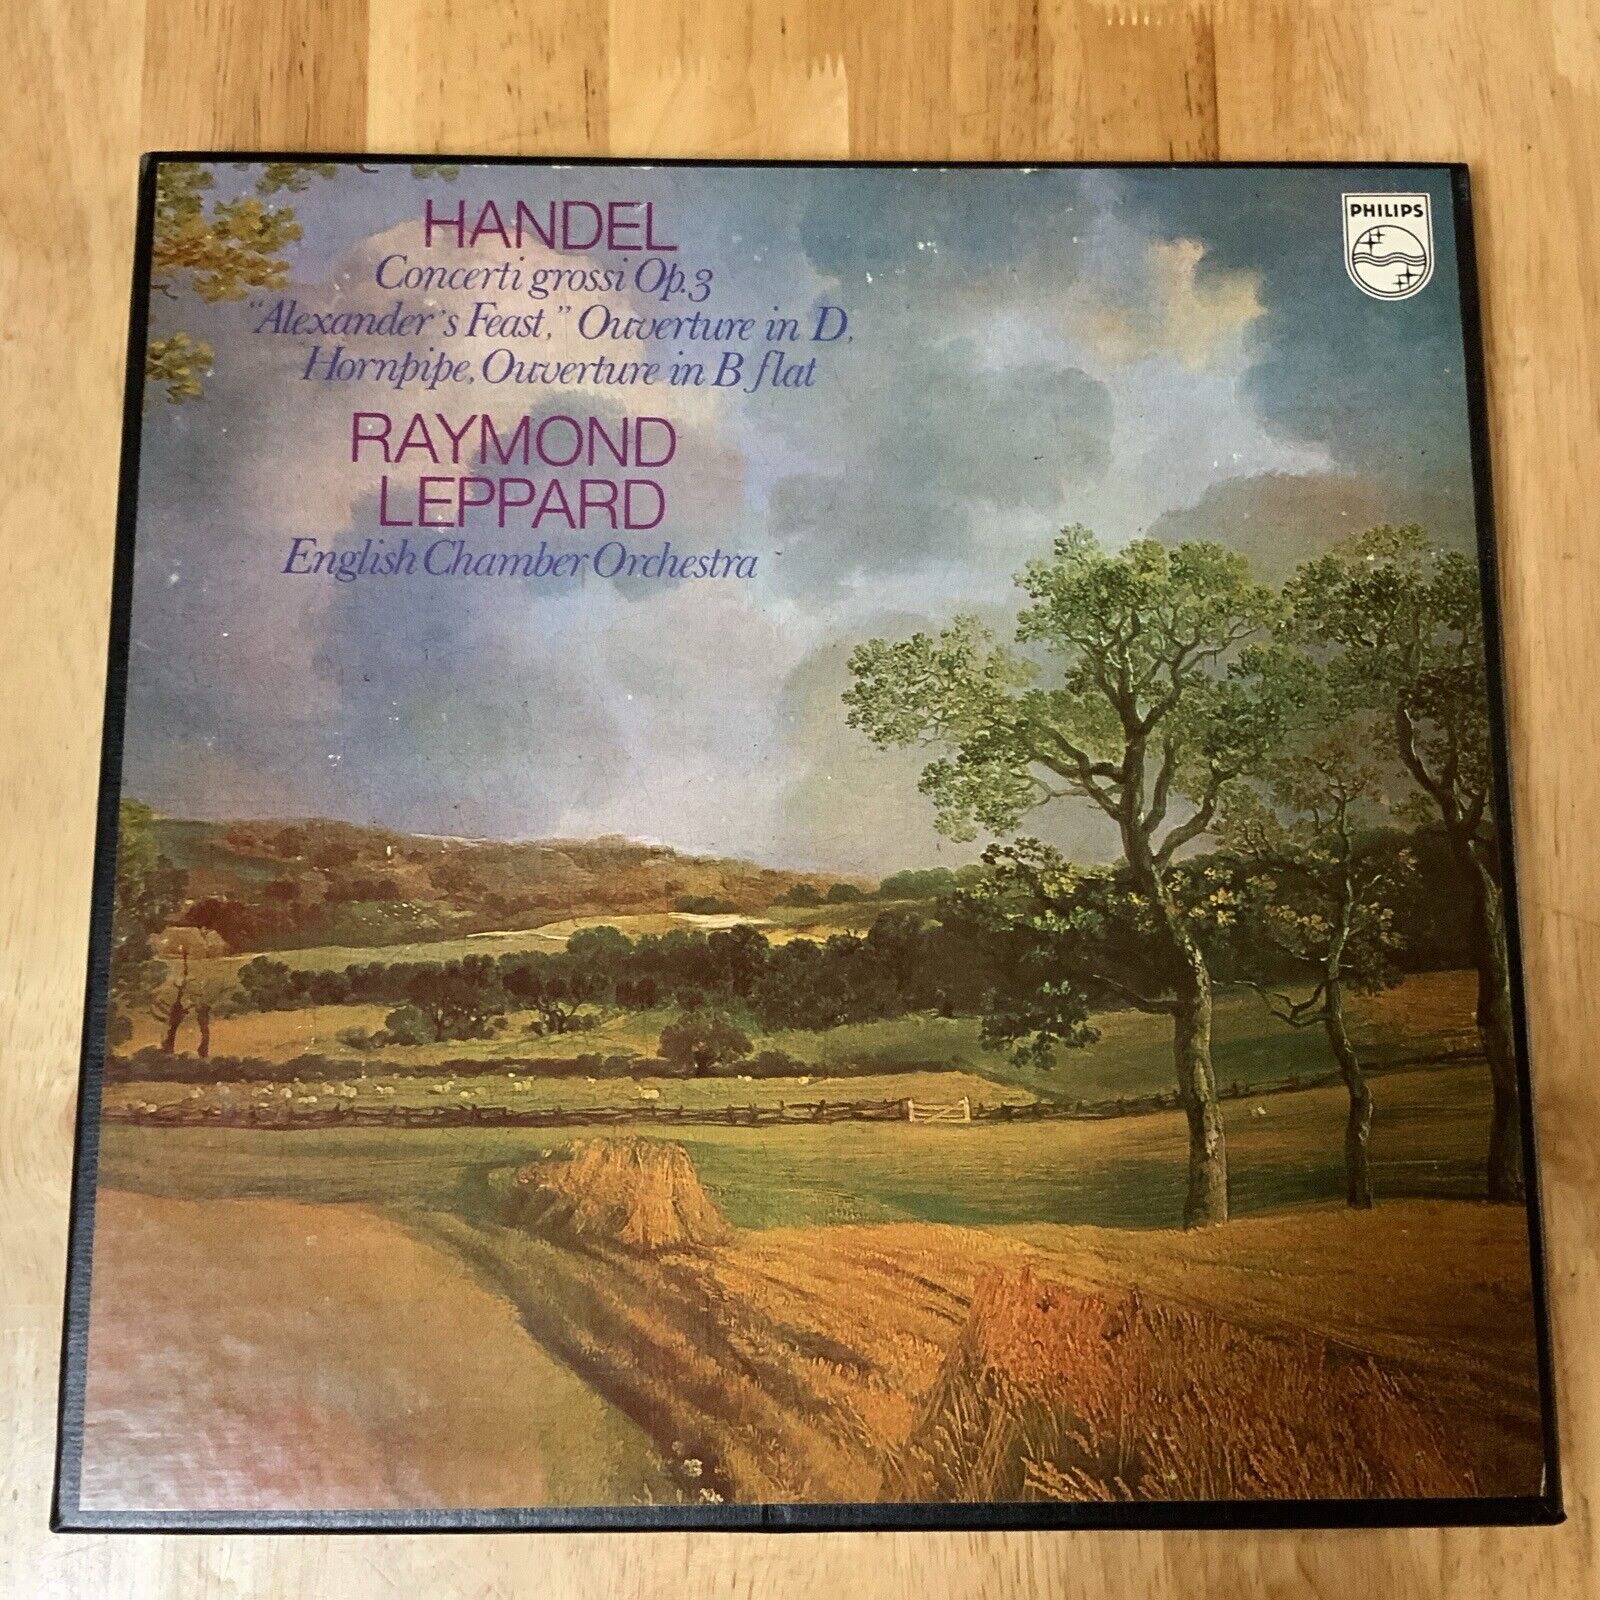 Handel Concerti Grossi Opus 3, Raymond Leppard - 3 LP Box Set